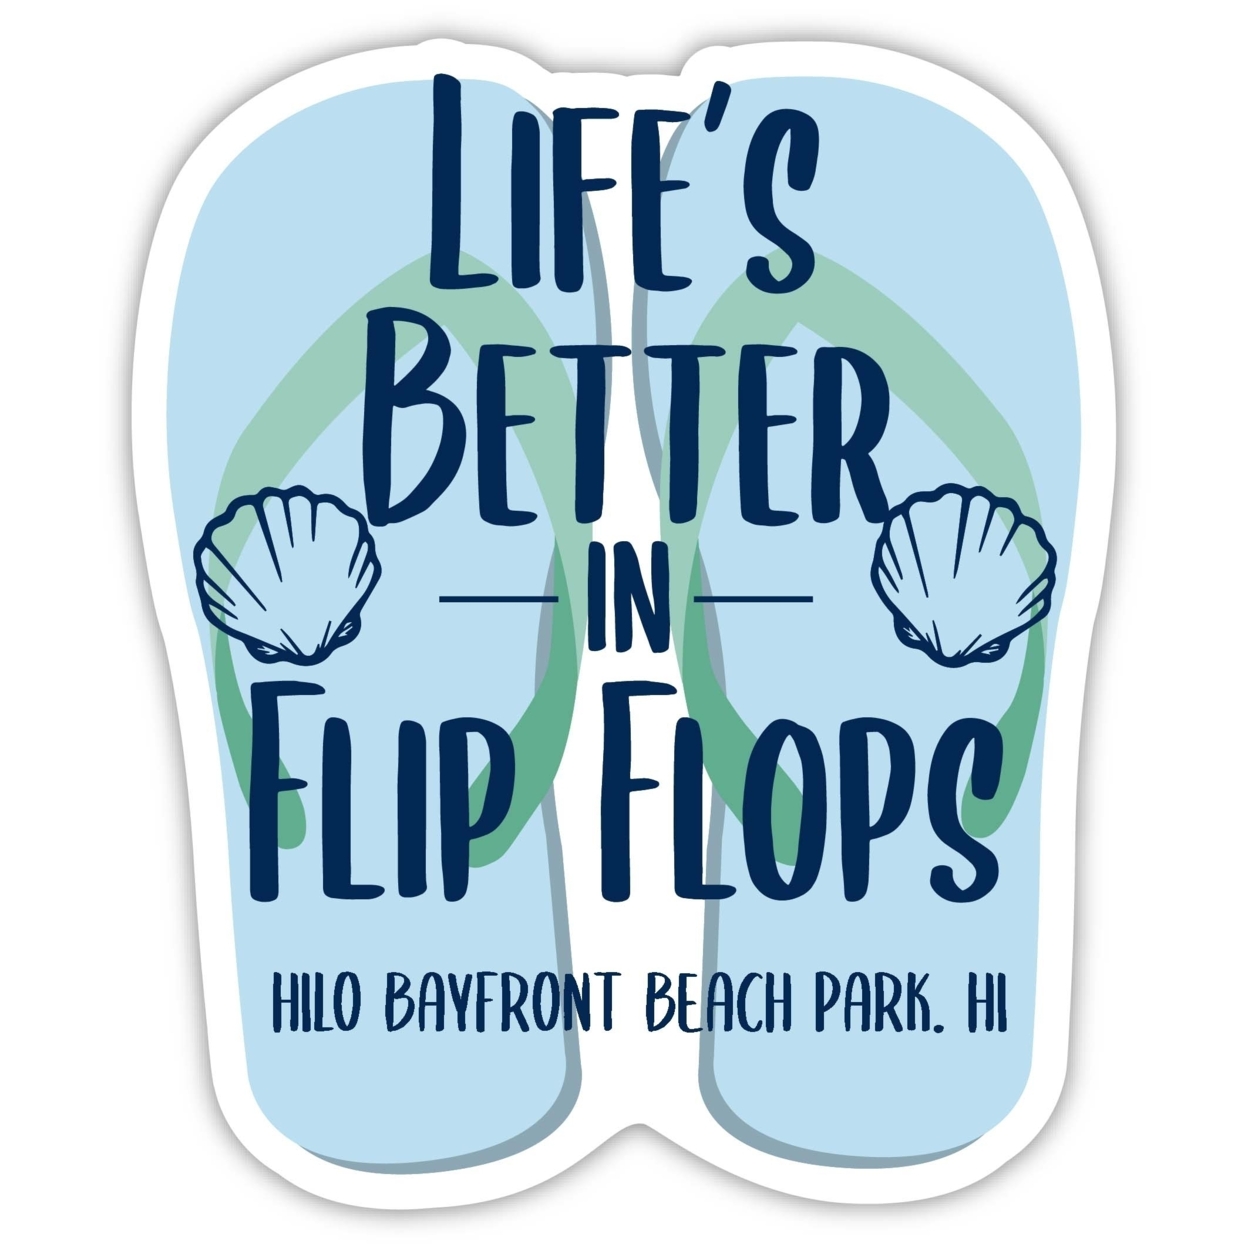 Hilo Bayfront Beach Park Hawaii Souvenir 4 Inch Vinyl Decal Sticker Flip Flop Design